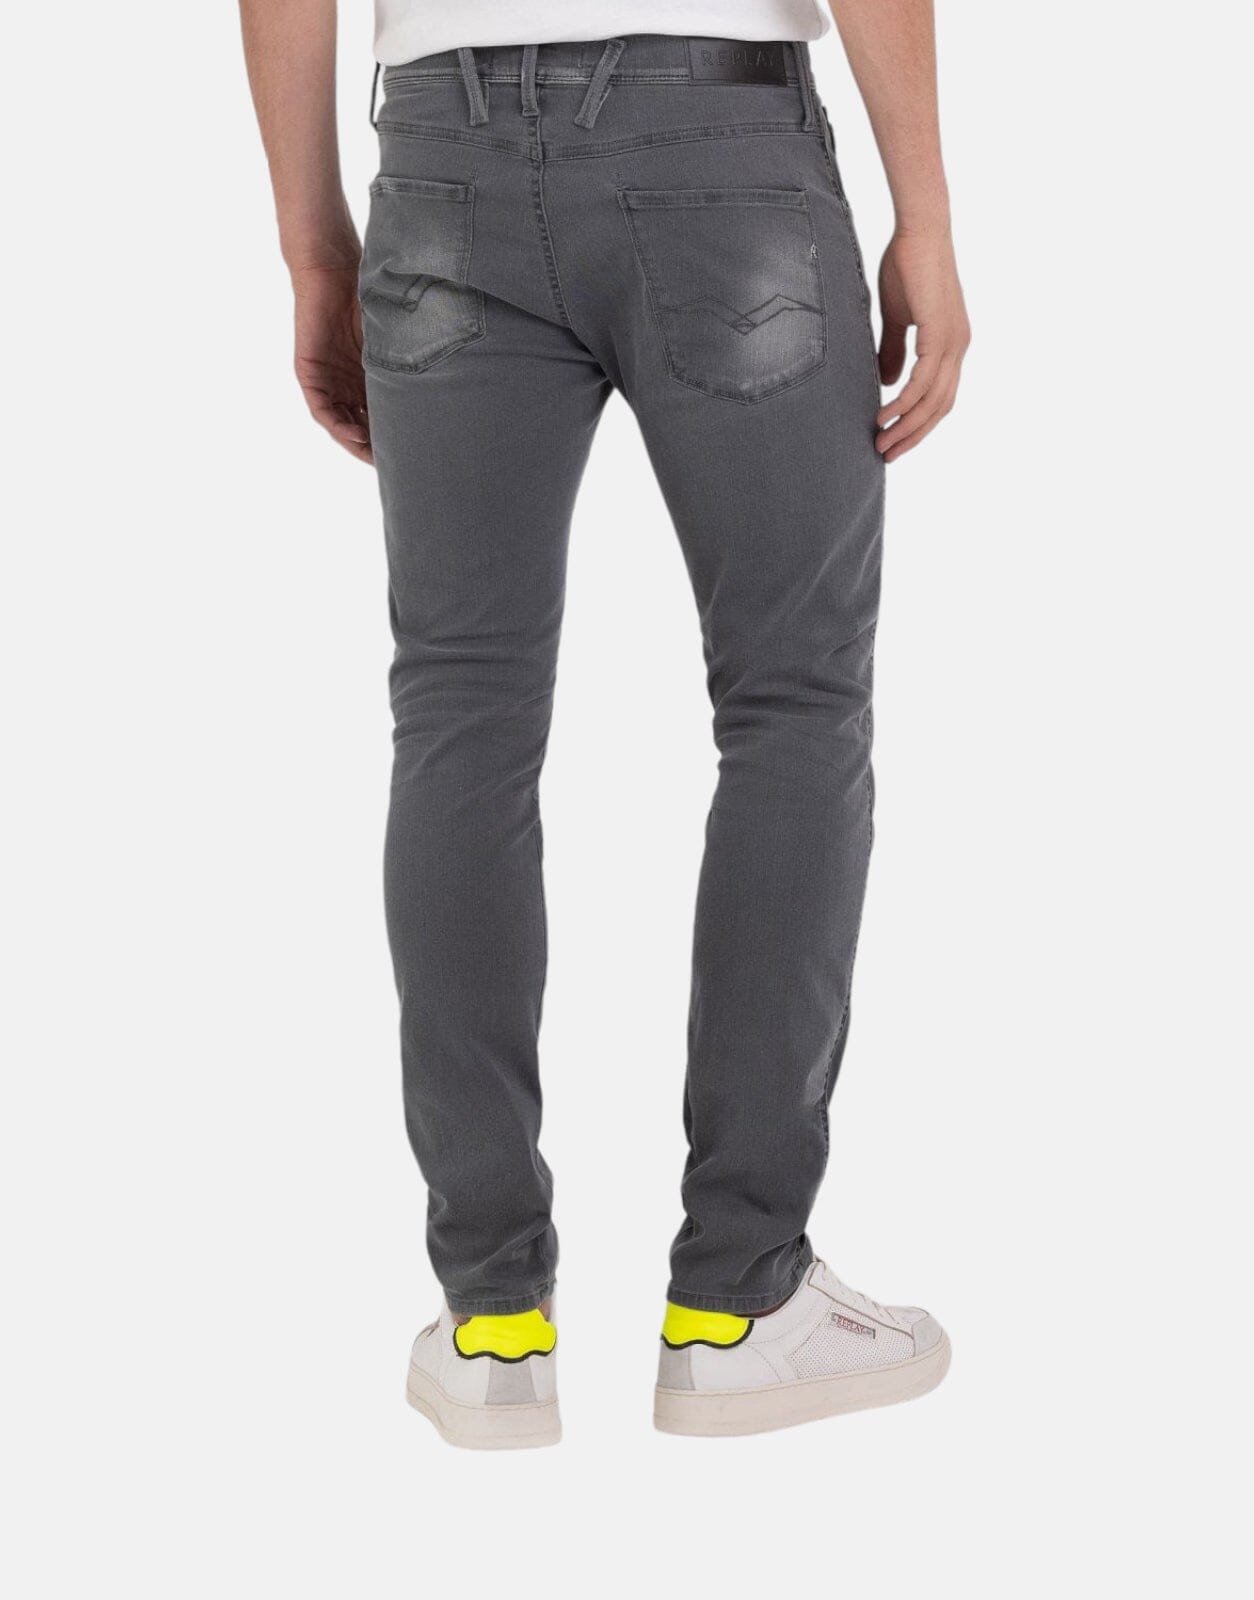 Replay Hyperflex Anbass Slim Fit Grey Jeans - Subwear